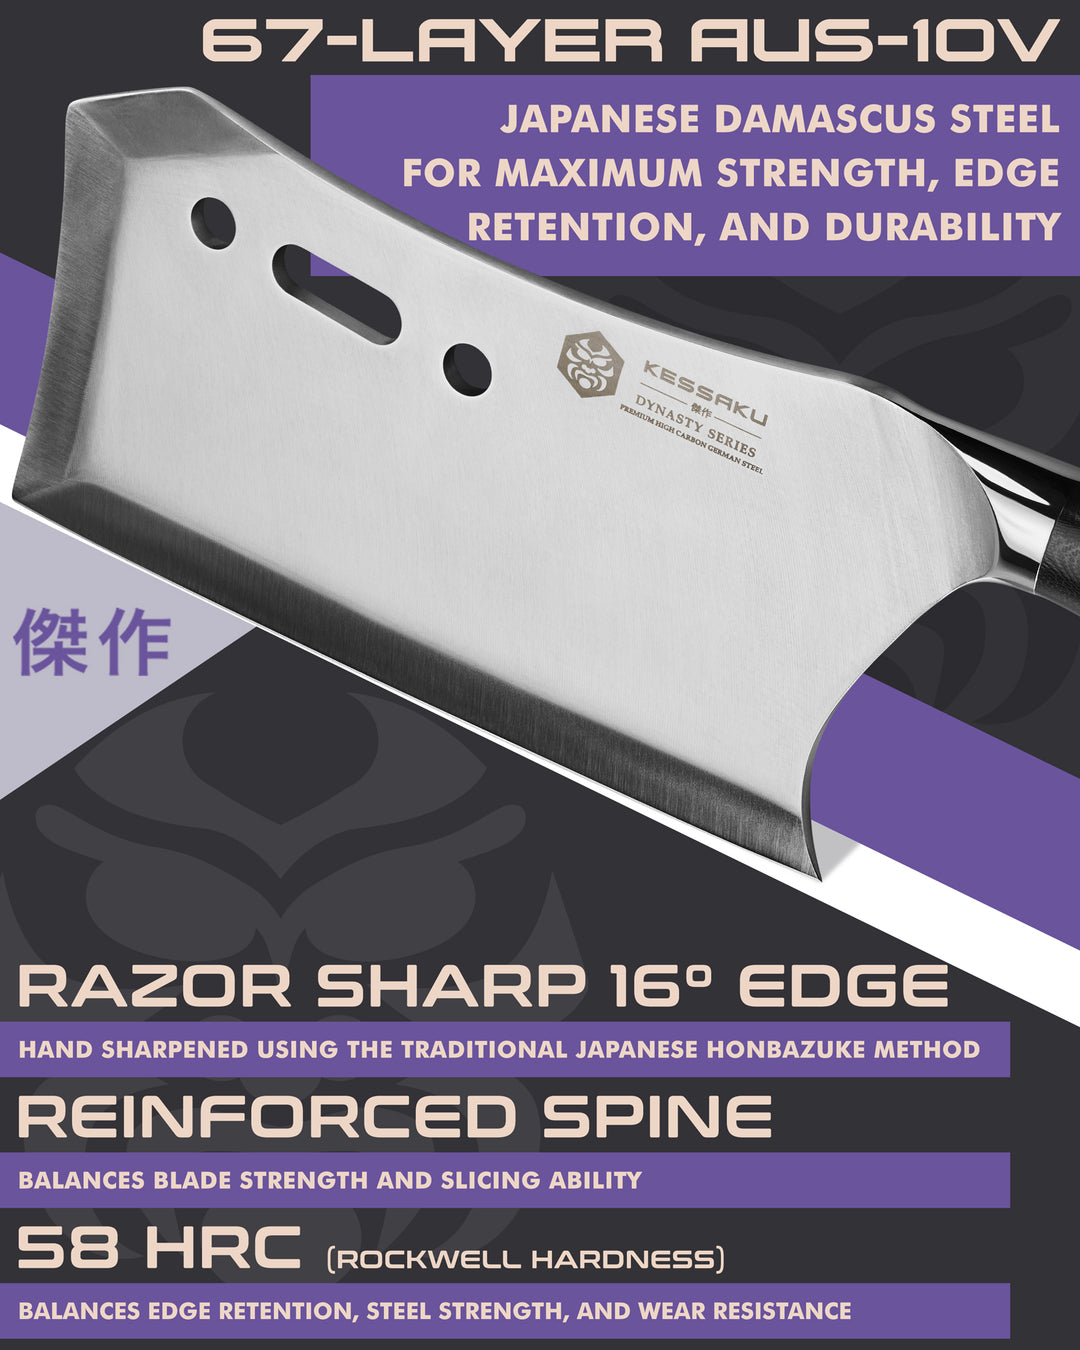 Kessaku Dynasty Butcher Knife blade features: 1.4116 German steel, 58 HRC, sharpened to 16 degrees, reinforced spine